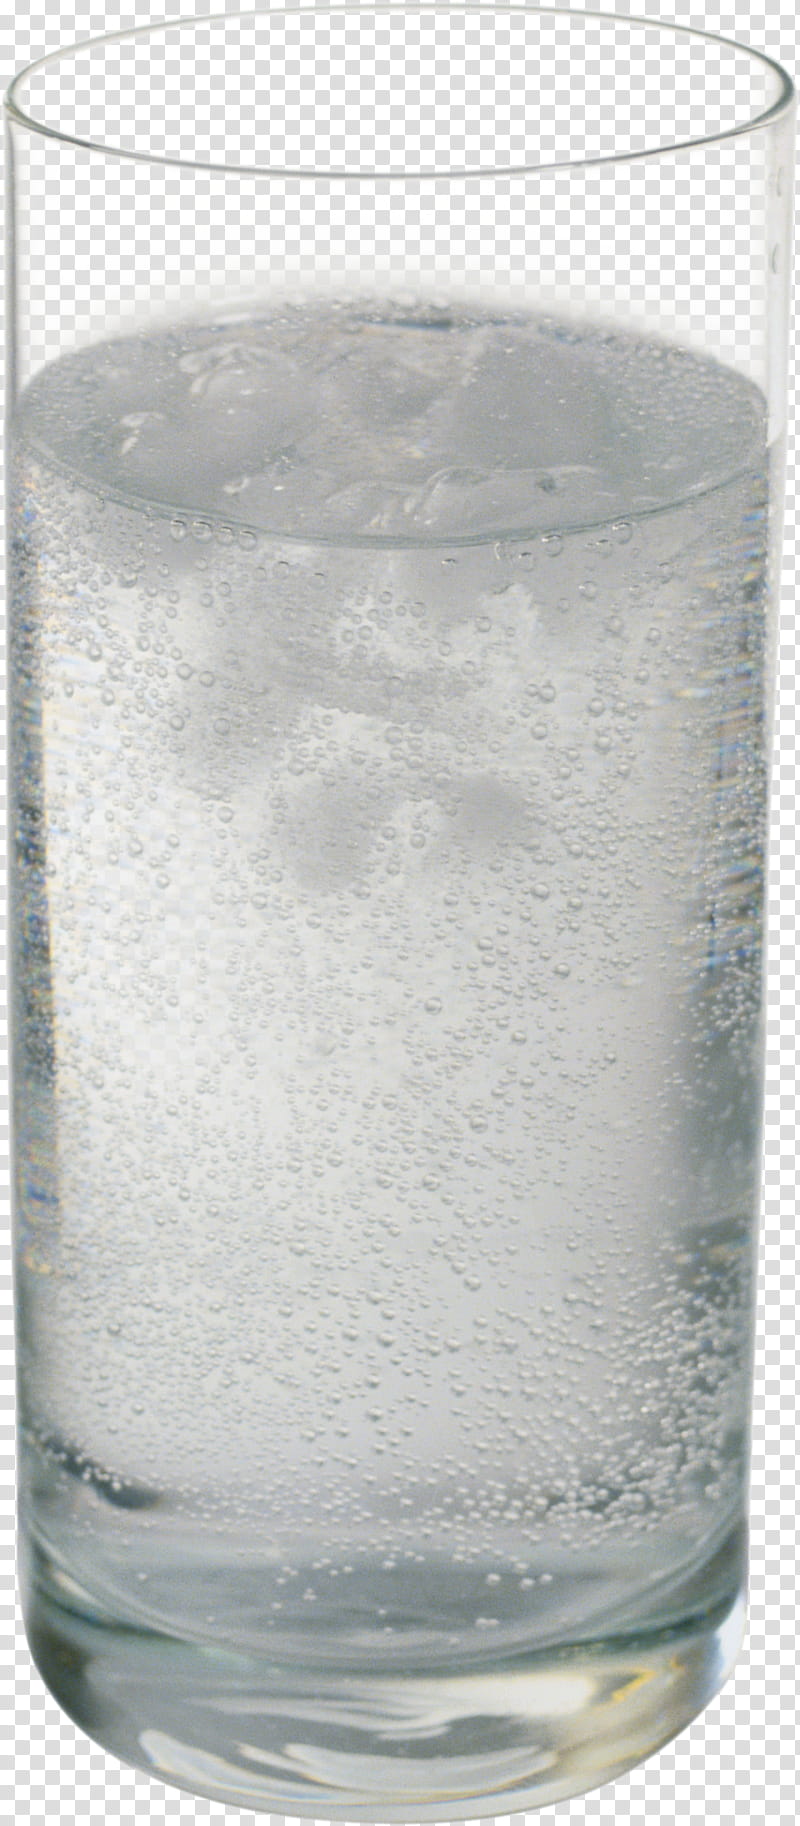 Beaker, Gin And Tonic, Water, Highball Glass, Vodka, Tonic Water, Megabyte, Depositfiles transparent background PNG clipart